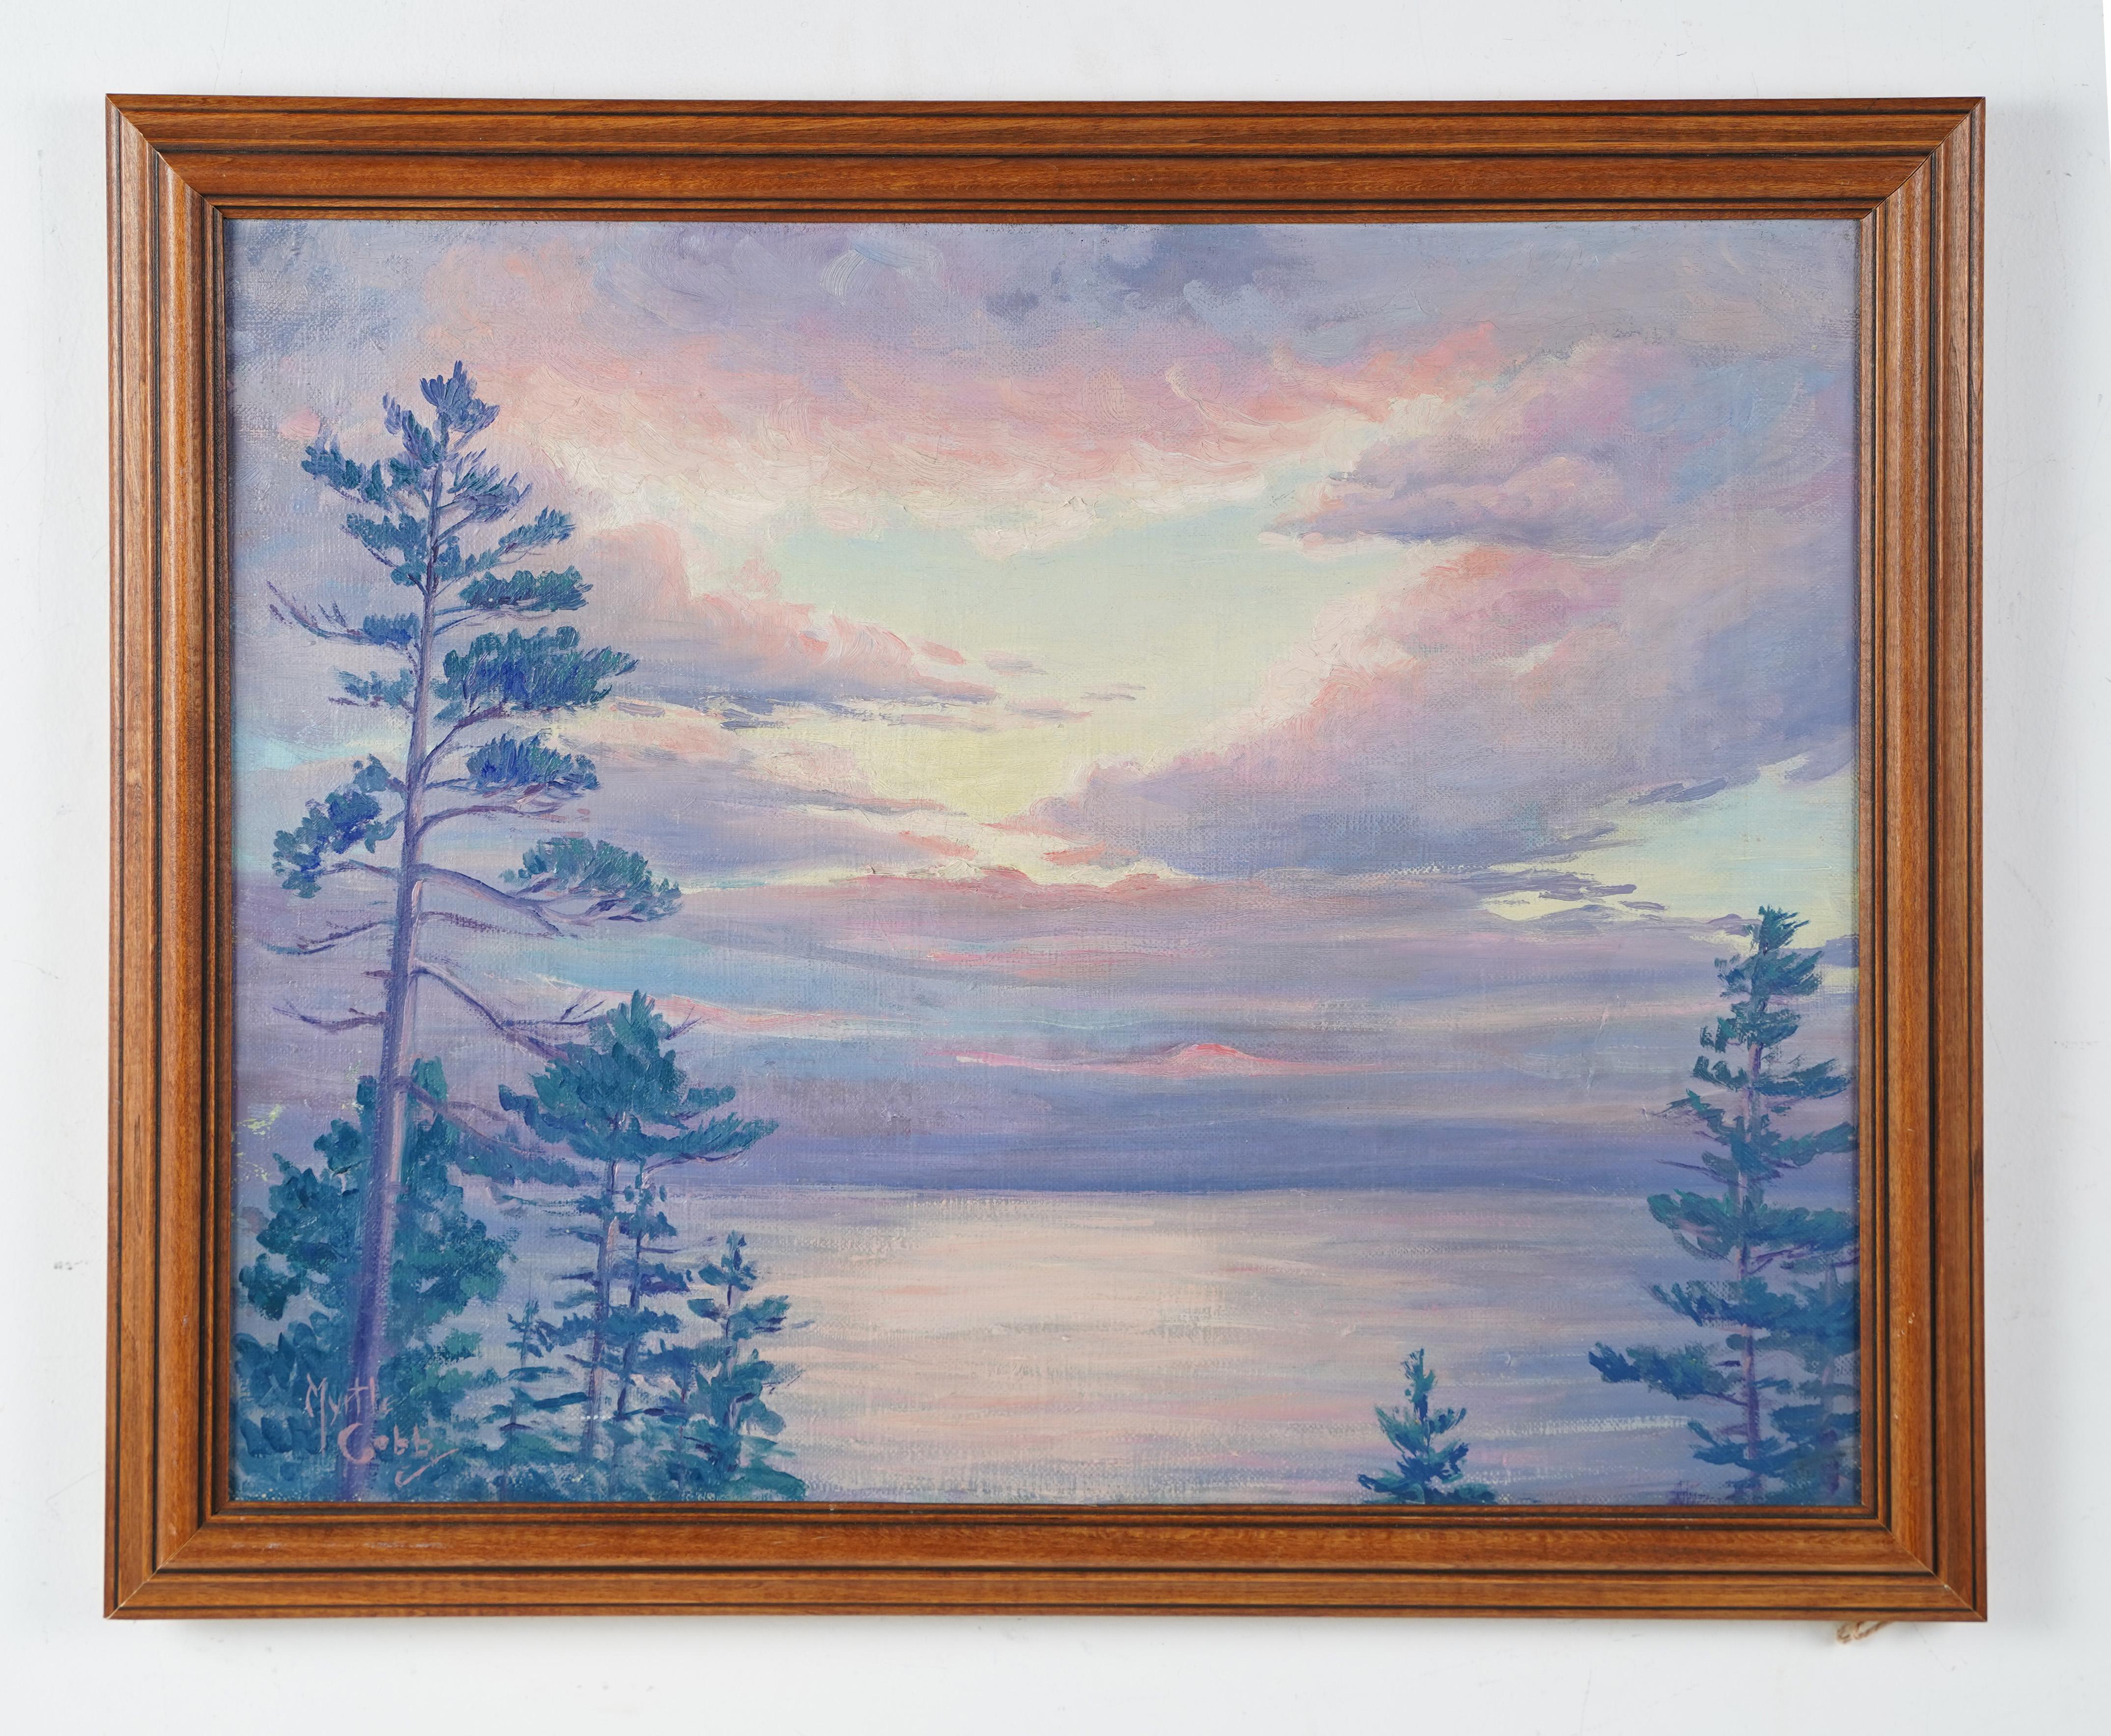 Antique American impressionist lake landscape signed oil painting.  Oil on canvas.  Signed.  Framed.  Image size, 20L x 16H.